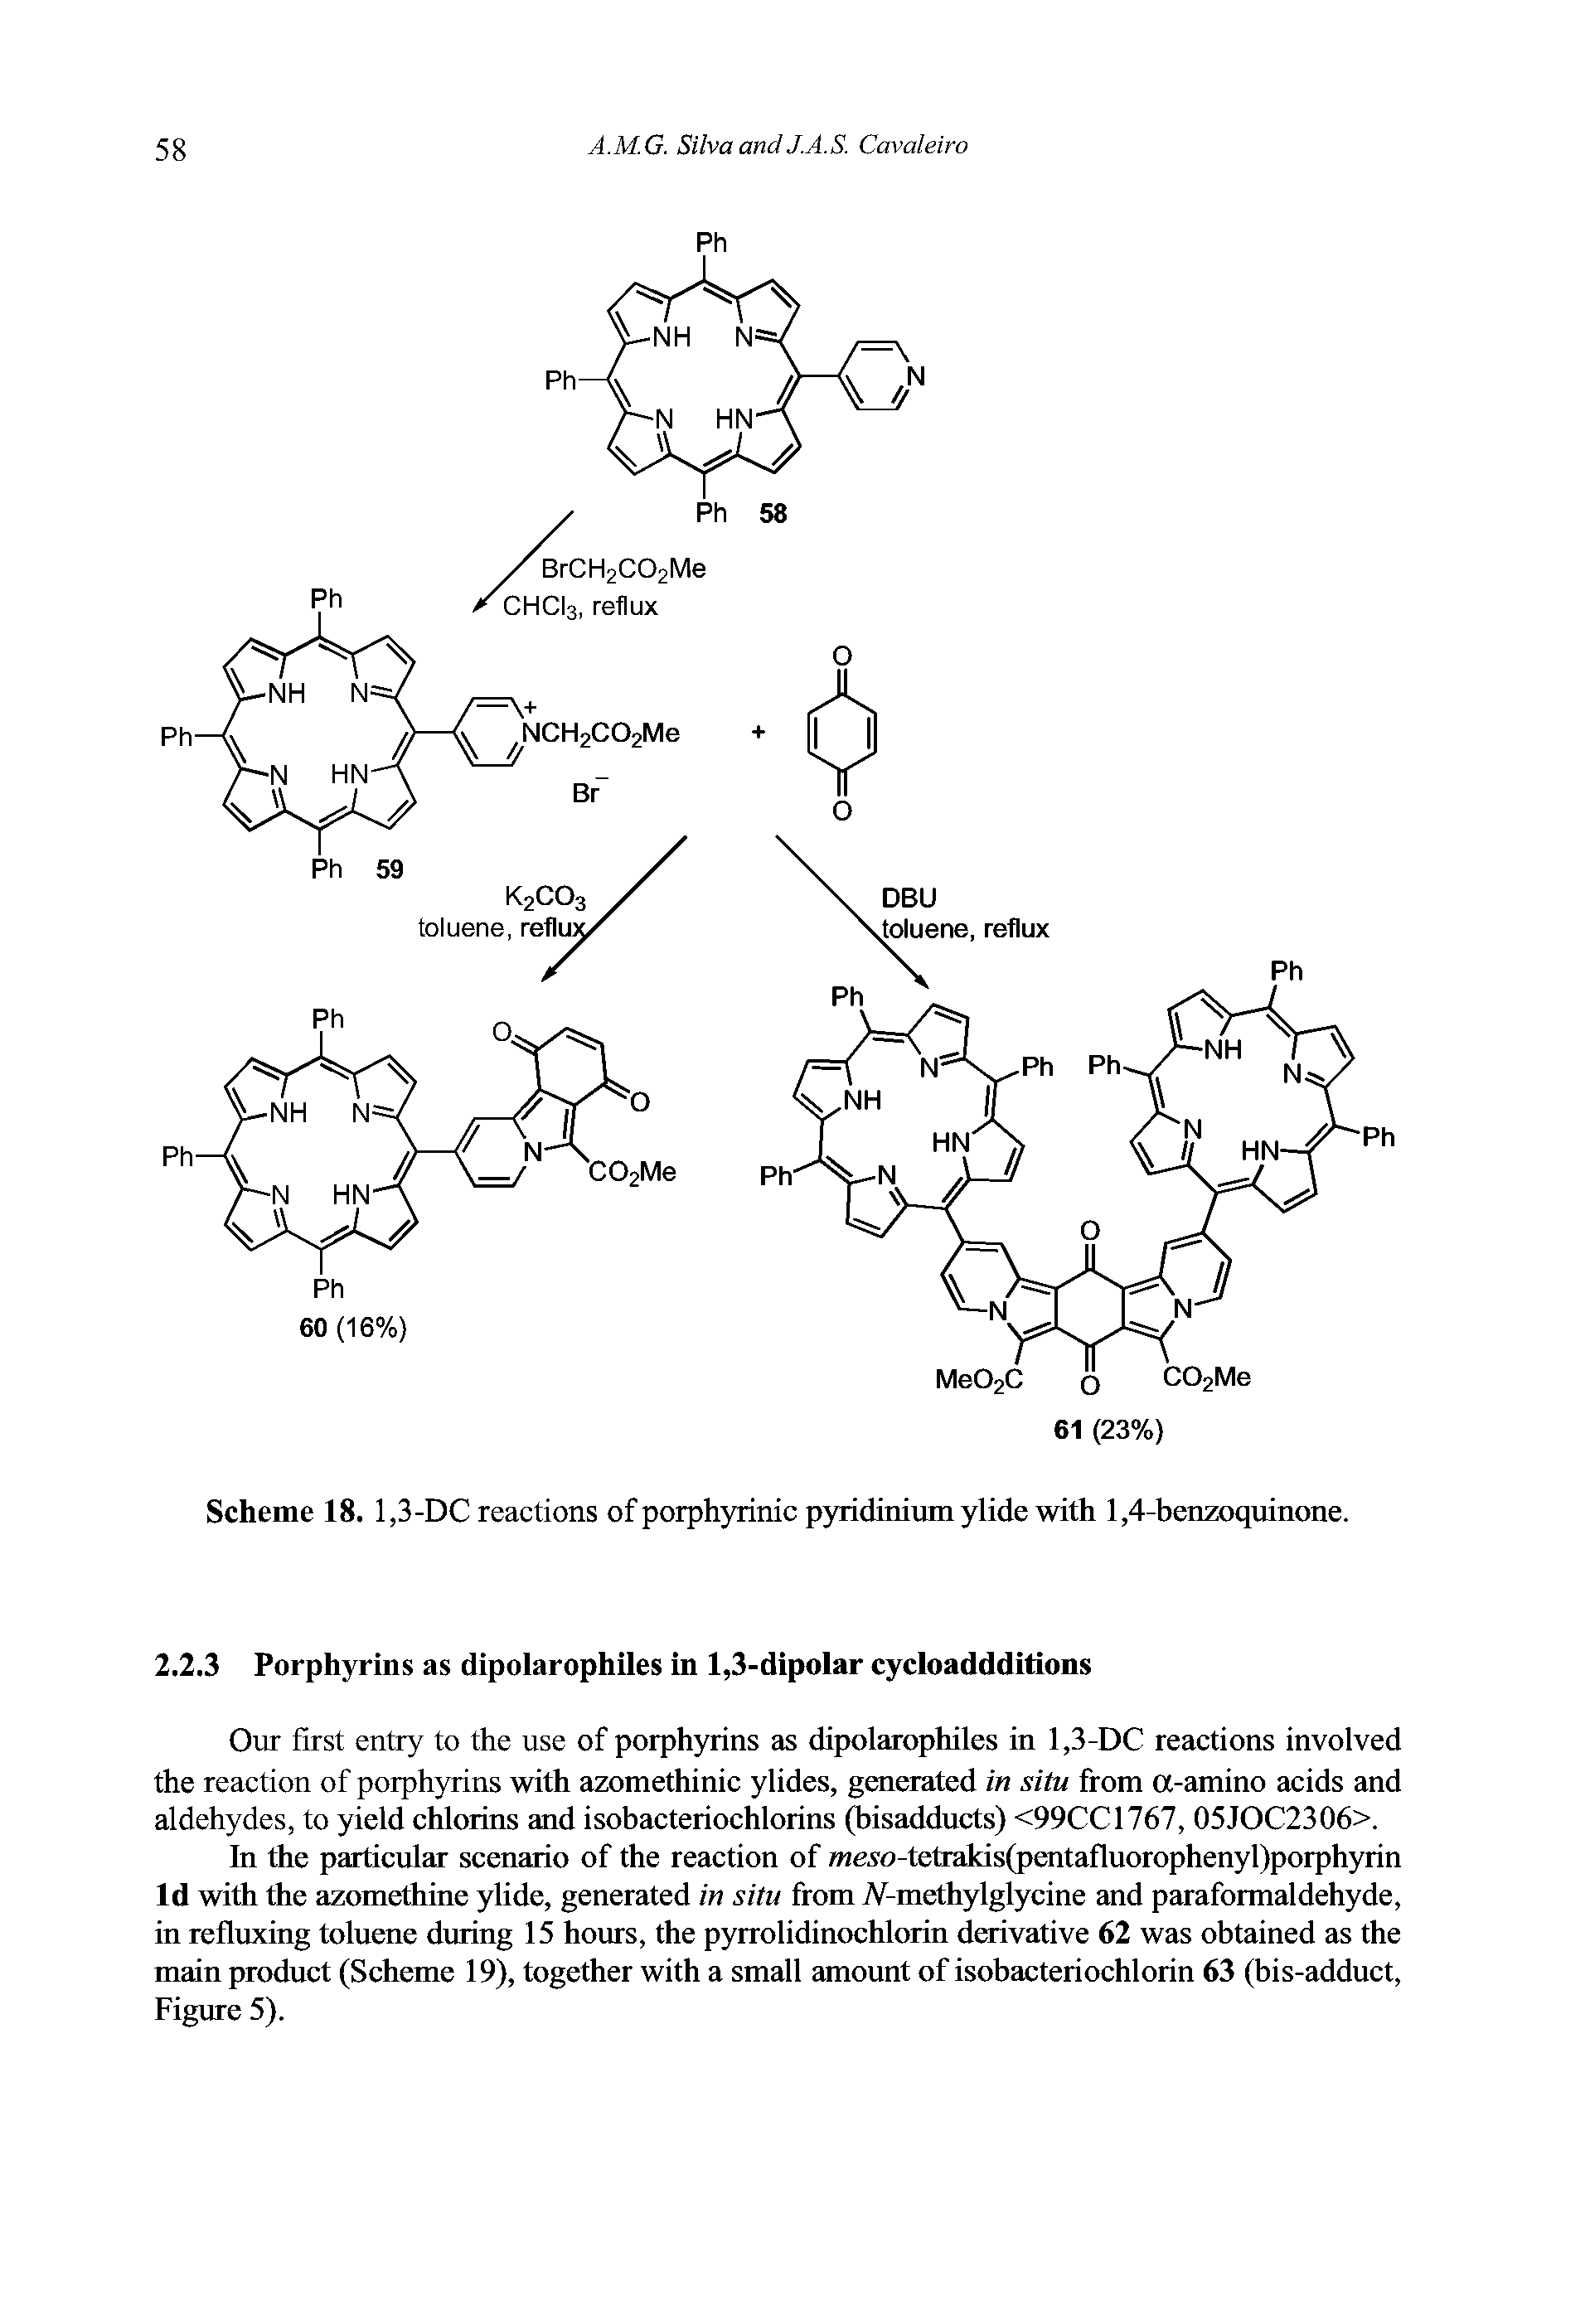 Scheme 18. 1,3-DC reactions of porphyrinic pyridinium ylide with 1,4-benzoquinone.